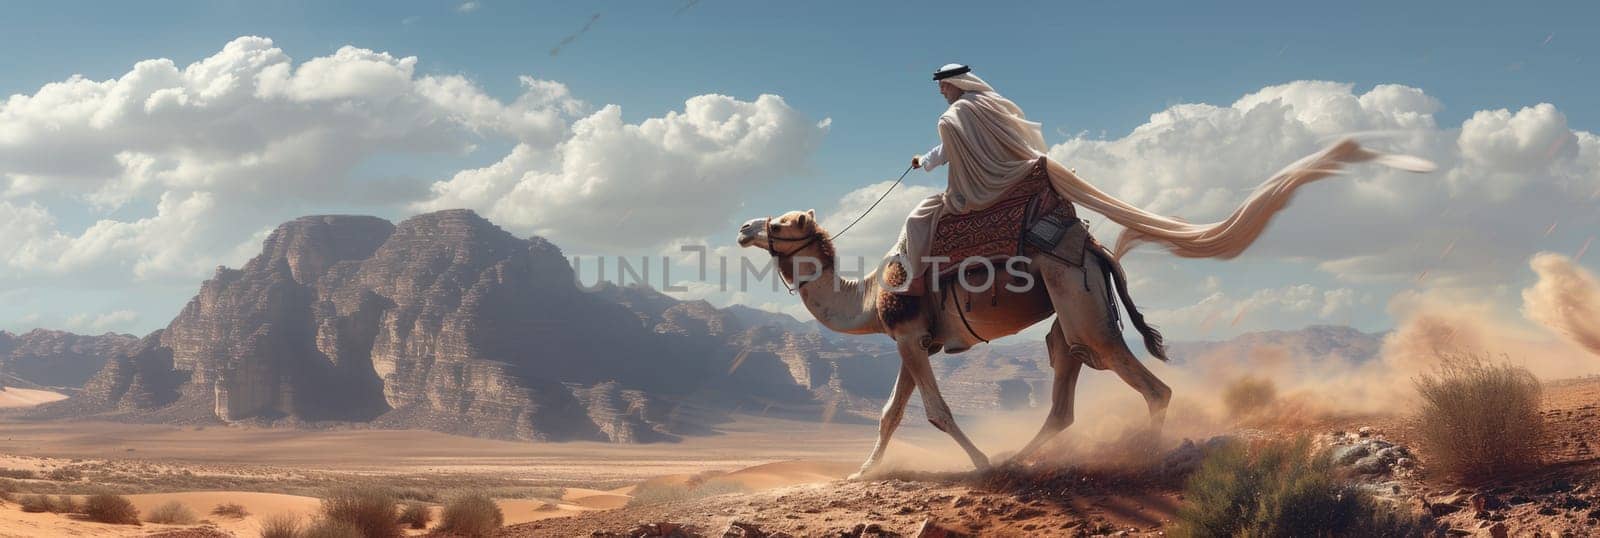 A man confidently rides a camel through the vast desert landscape.